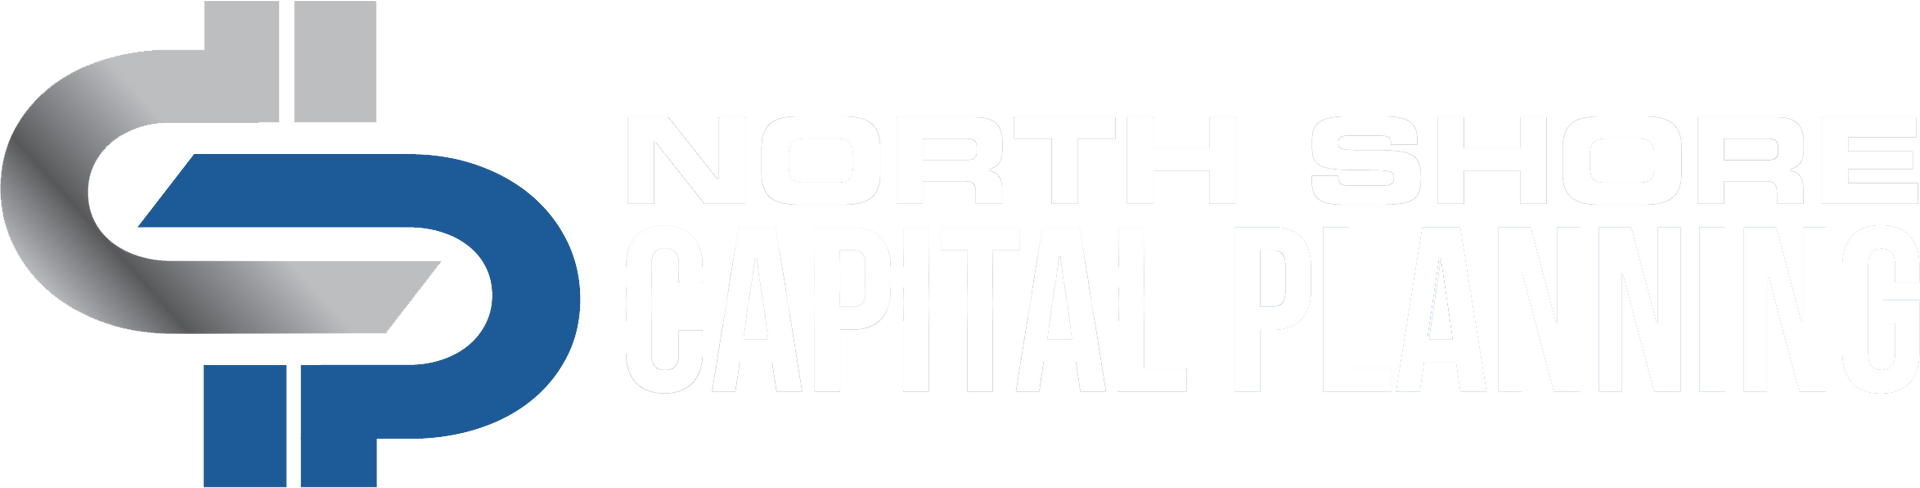 North Shore Capital Planning